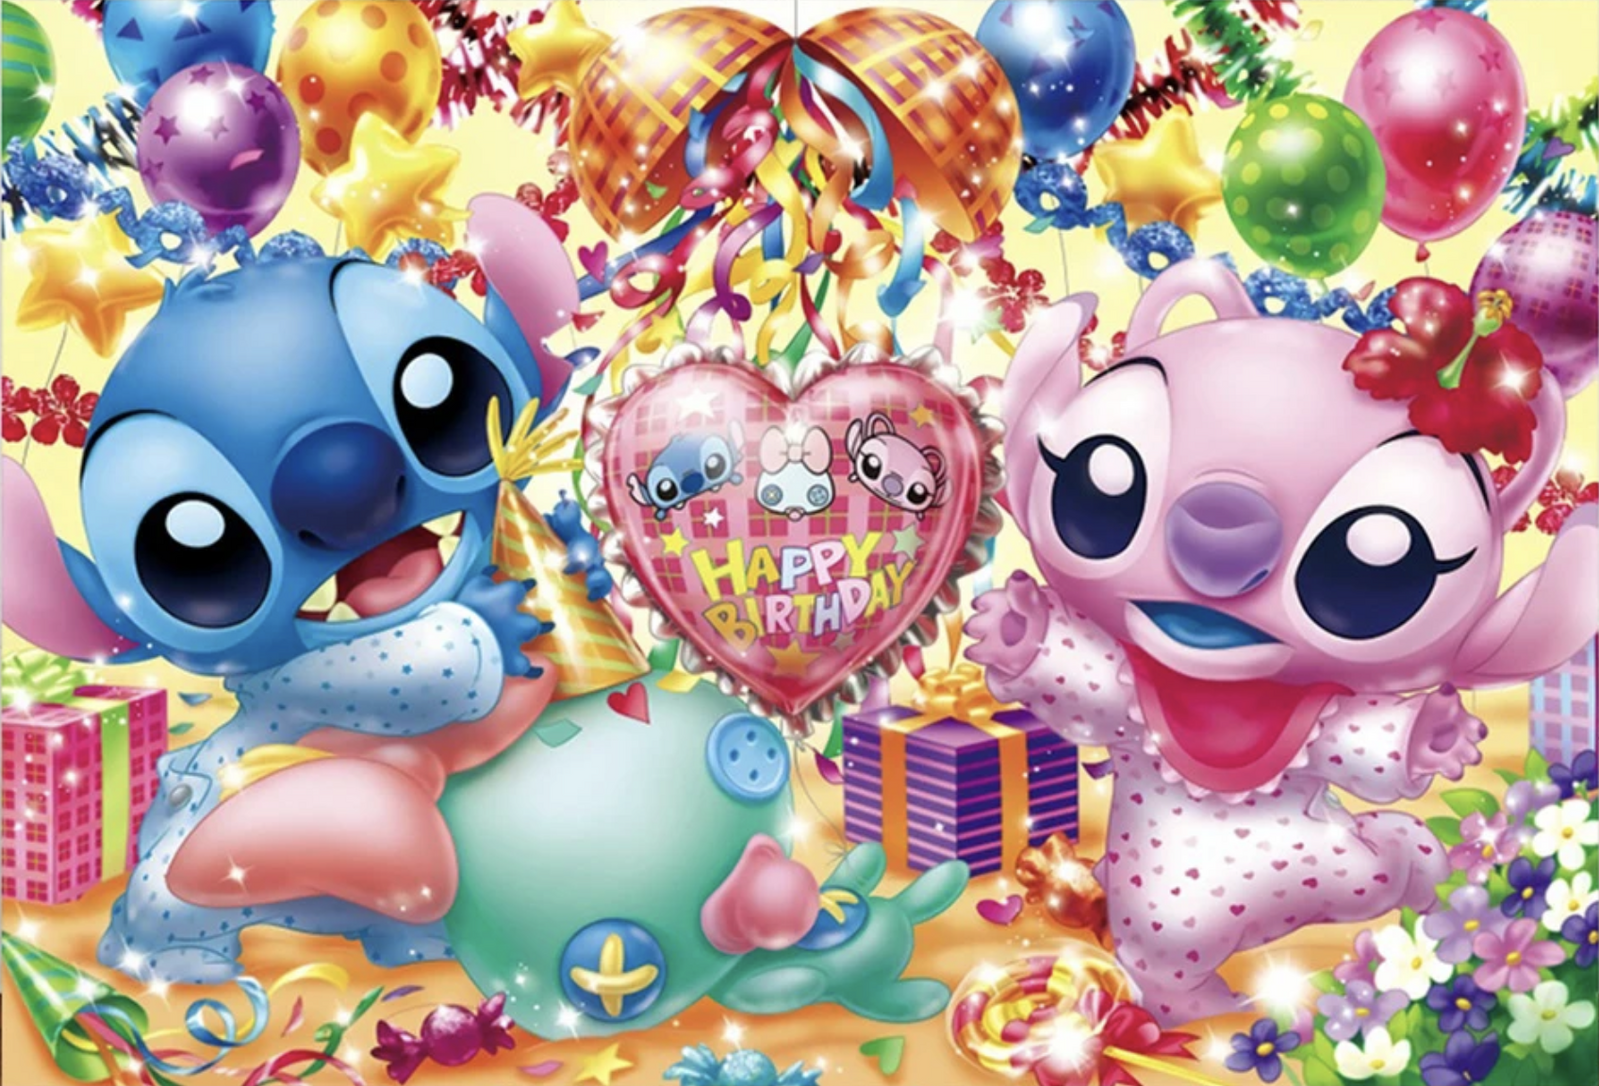 Disney Lilo Stitch Party Backdrops Children's Happy Birthday Decoration  Photographic Background Decorations Kids Decor Banner